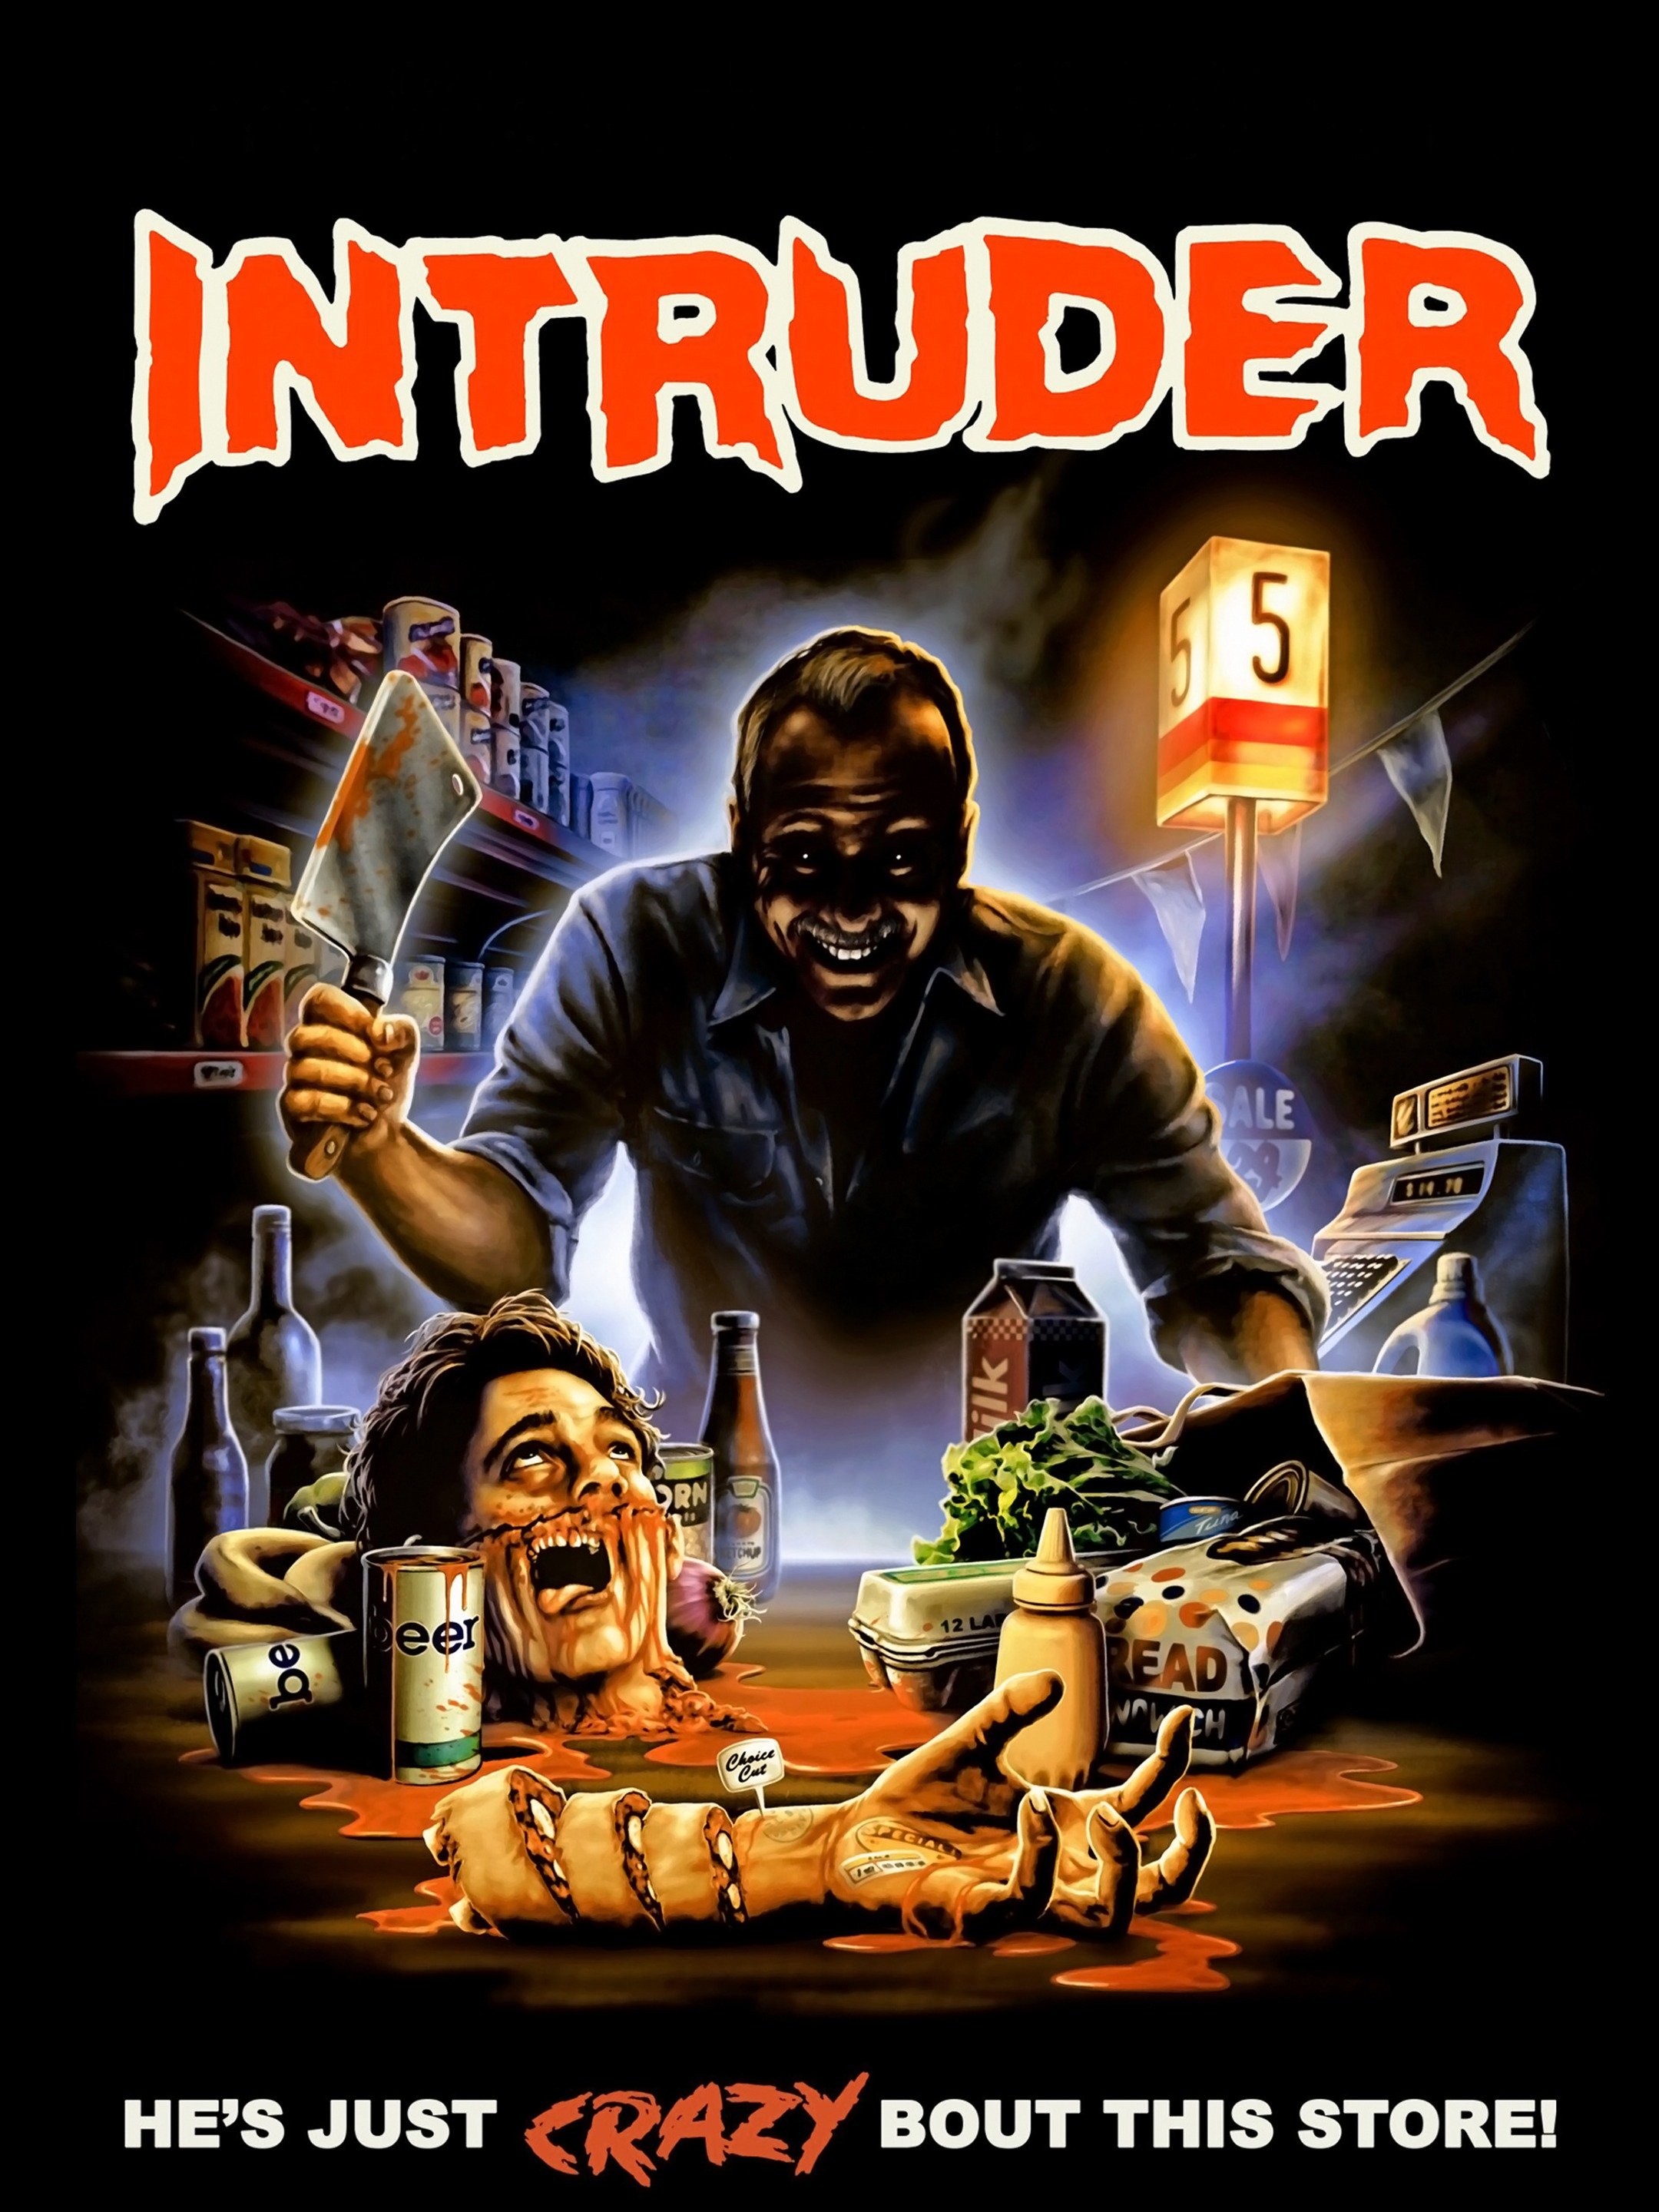 Intruder (2016 film) - Wikipedia